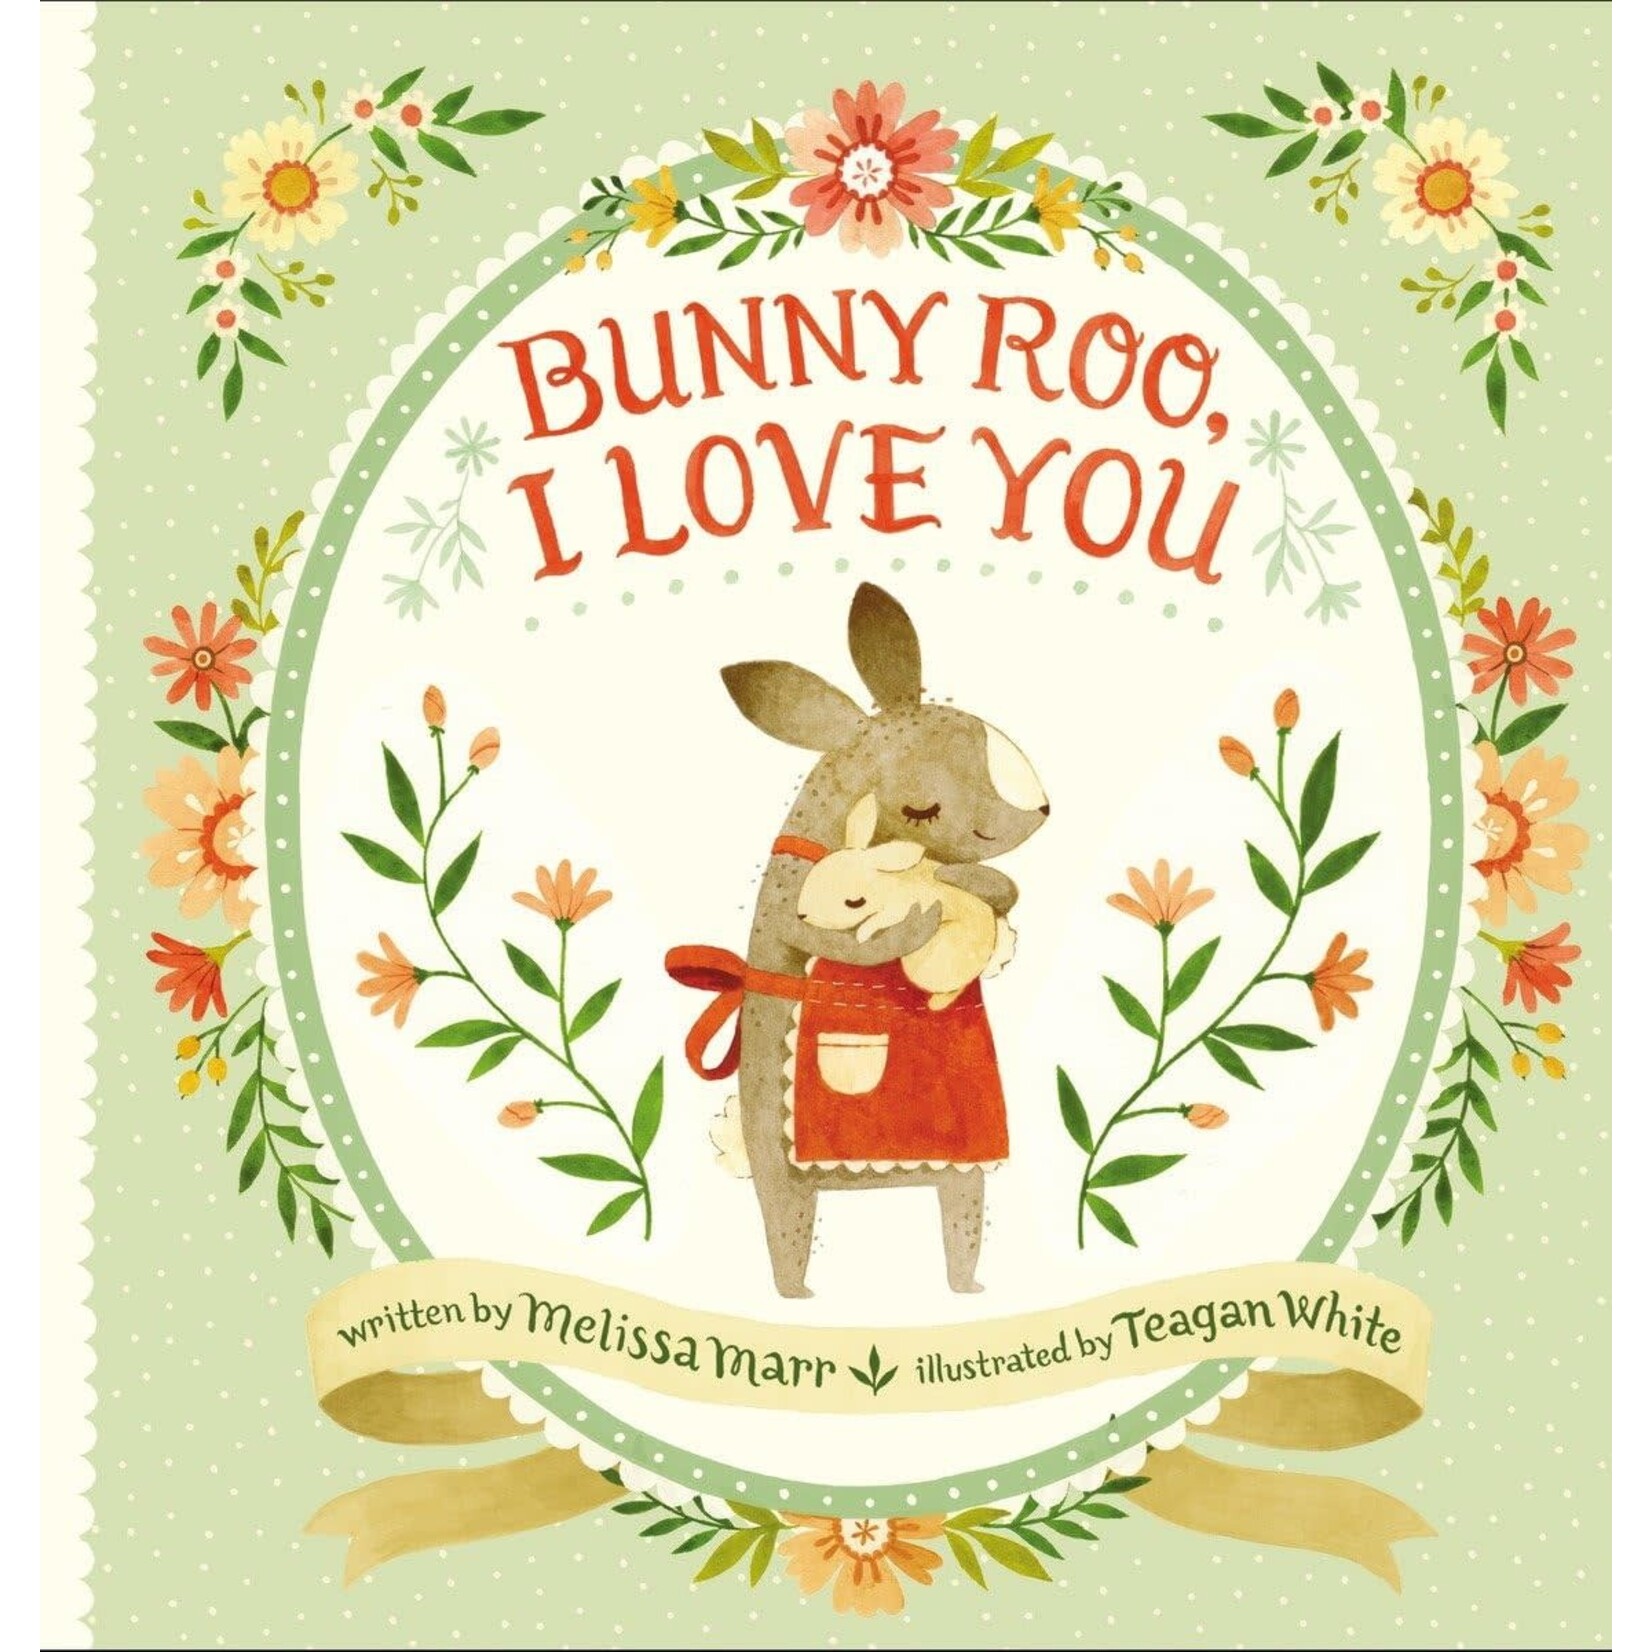 Bunny Roo, I Love You!